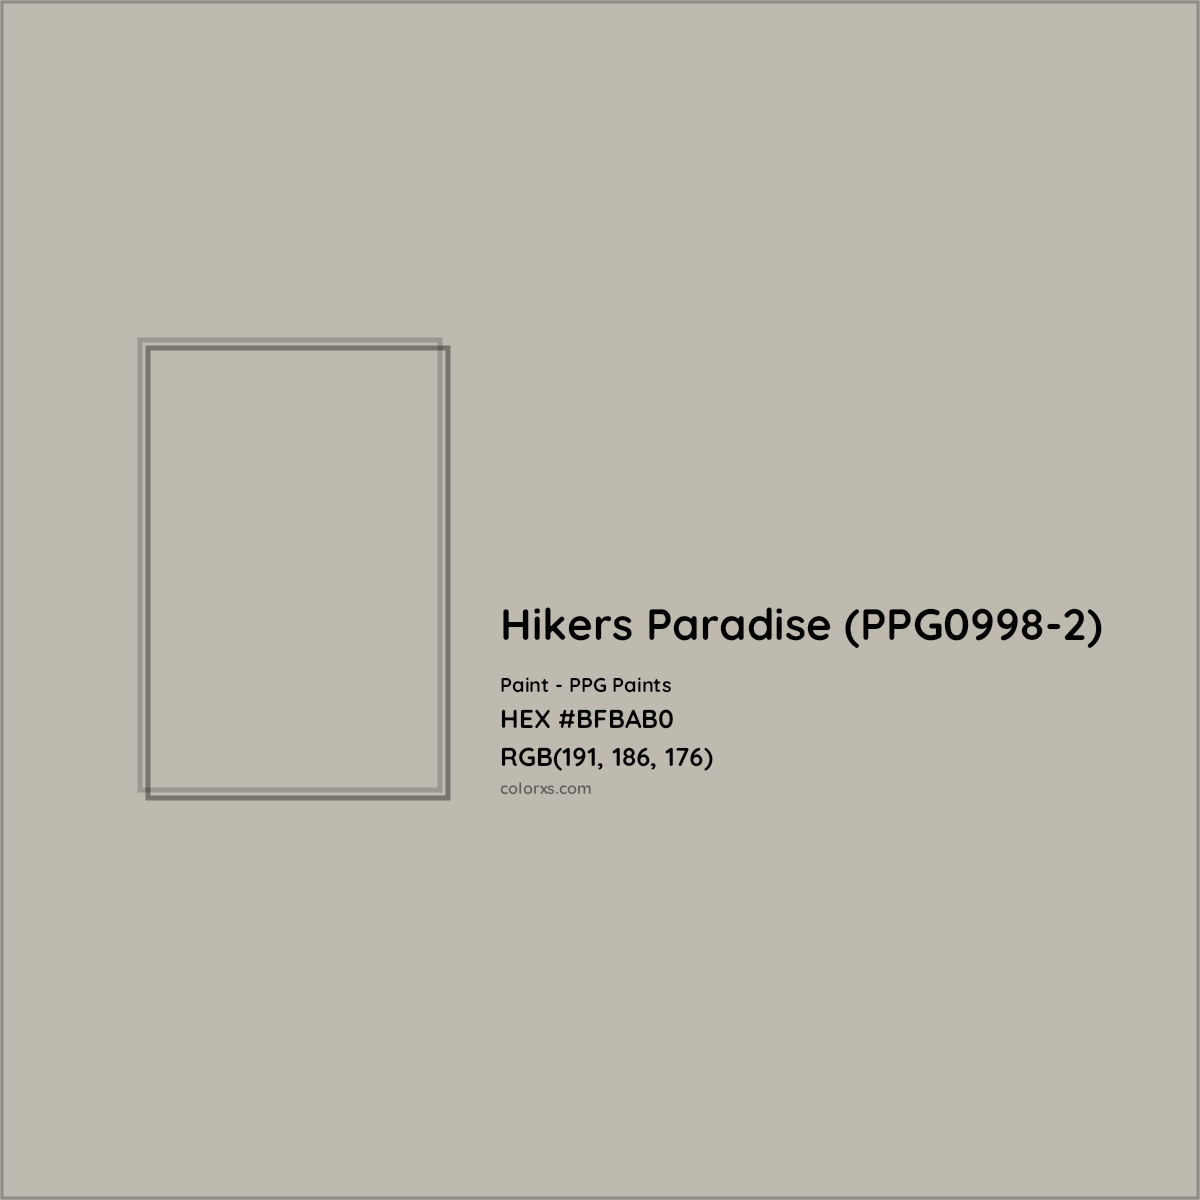 HEX #BFBAB0 Hikers Paradise (PPG0998-2) Paint PPG Paints - Color Code